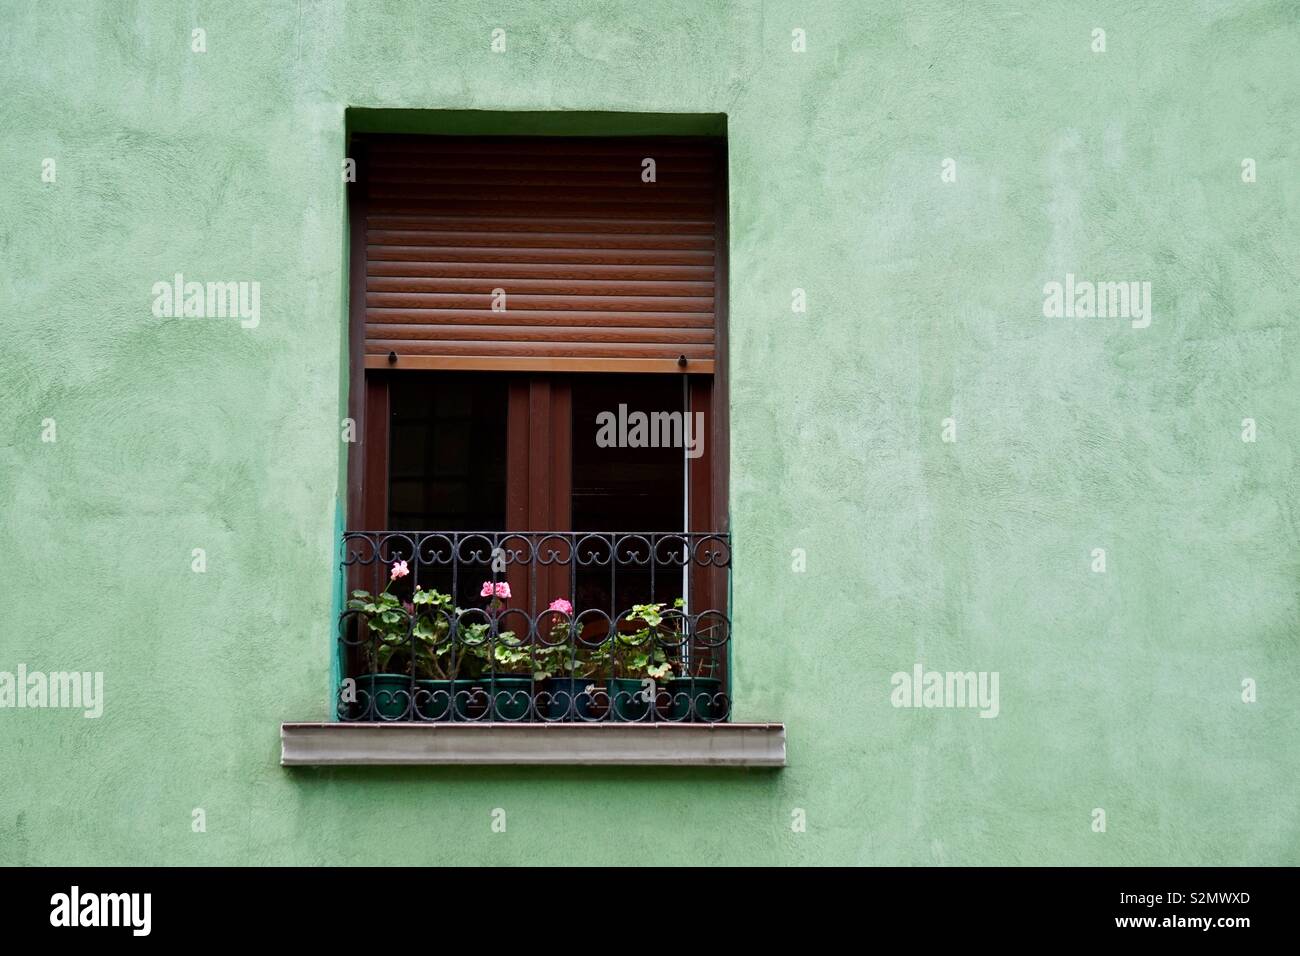 window on the green building facade Stock Photo